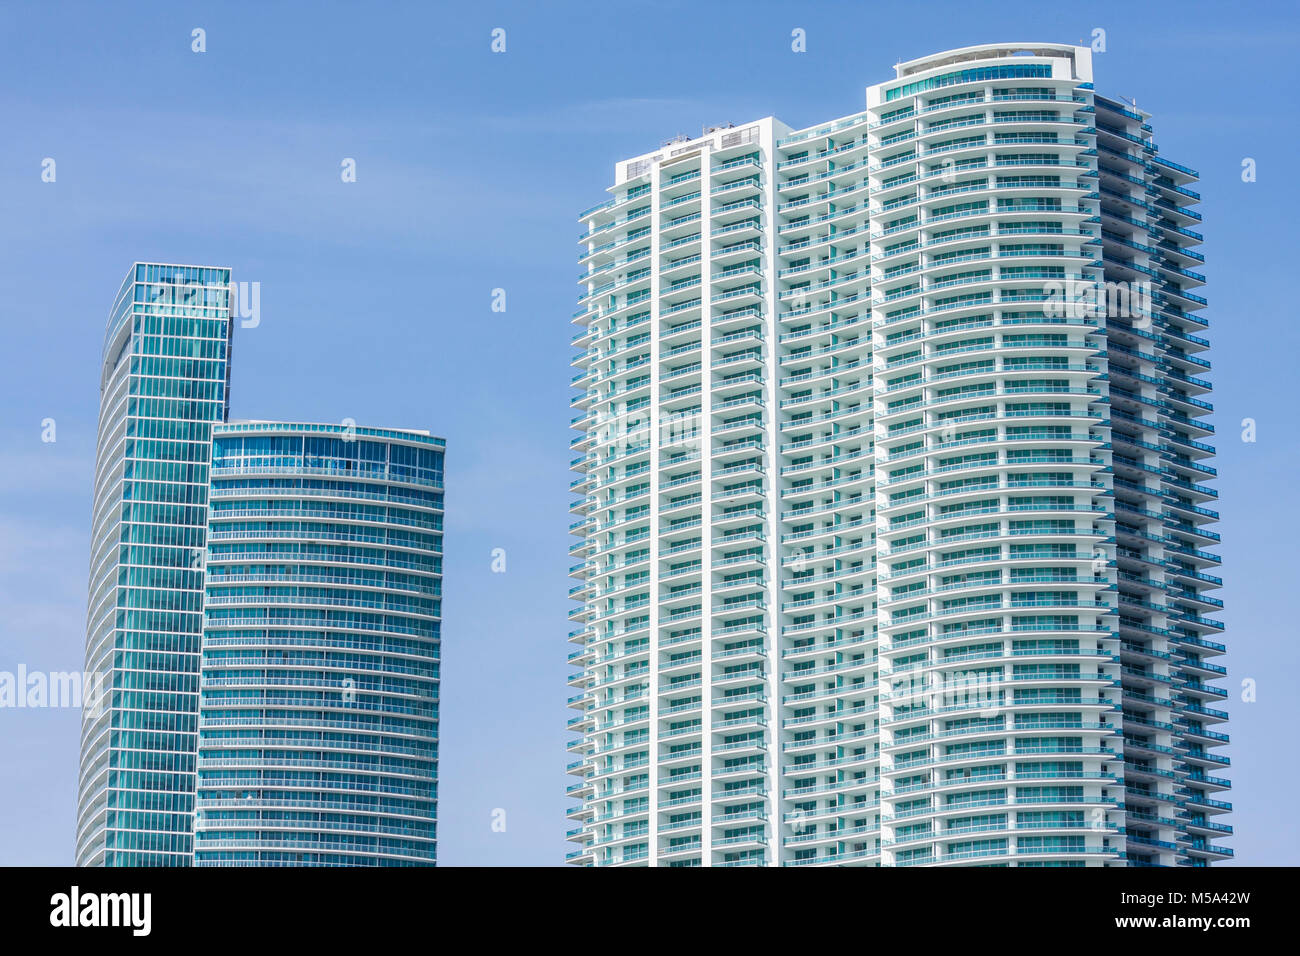 Miami Florida, Biscayne Boulevard, grattacieli grattacieli edifici condominio condomini condomini residenze residenziali apar Foto Stock